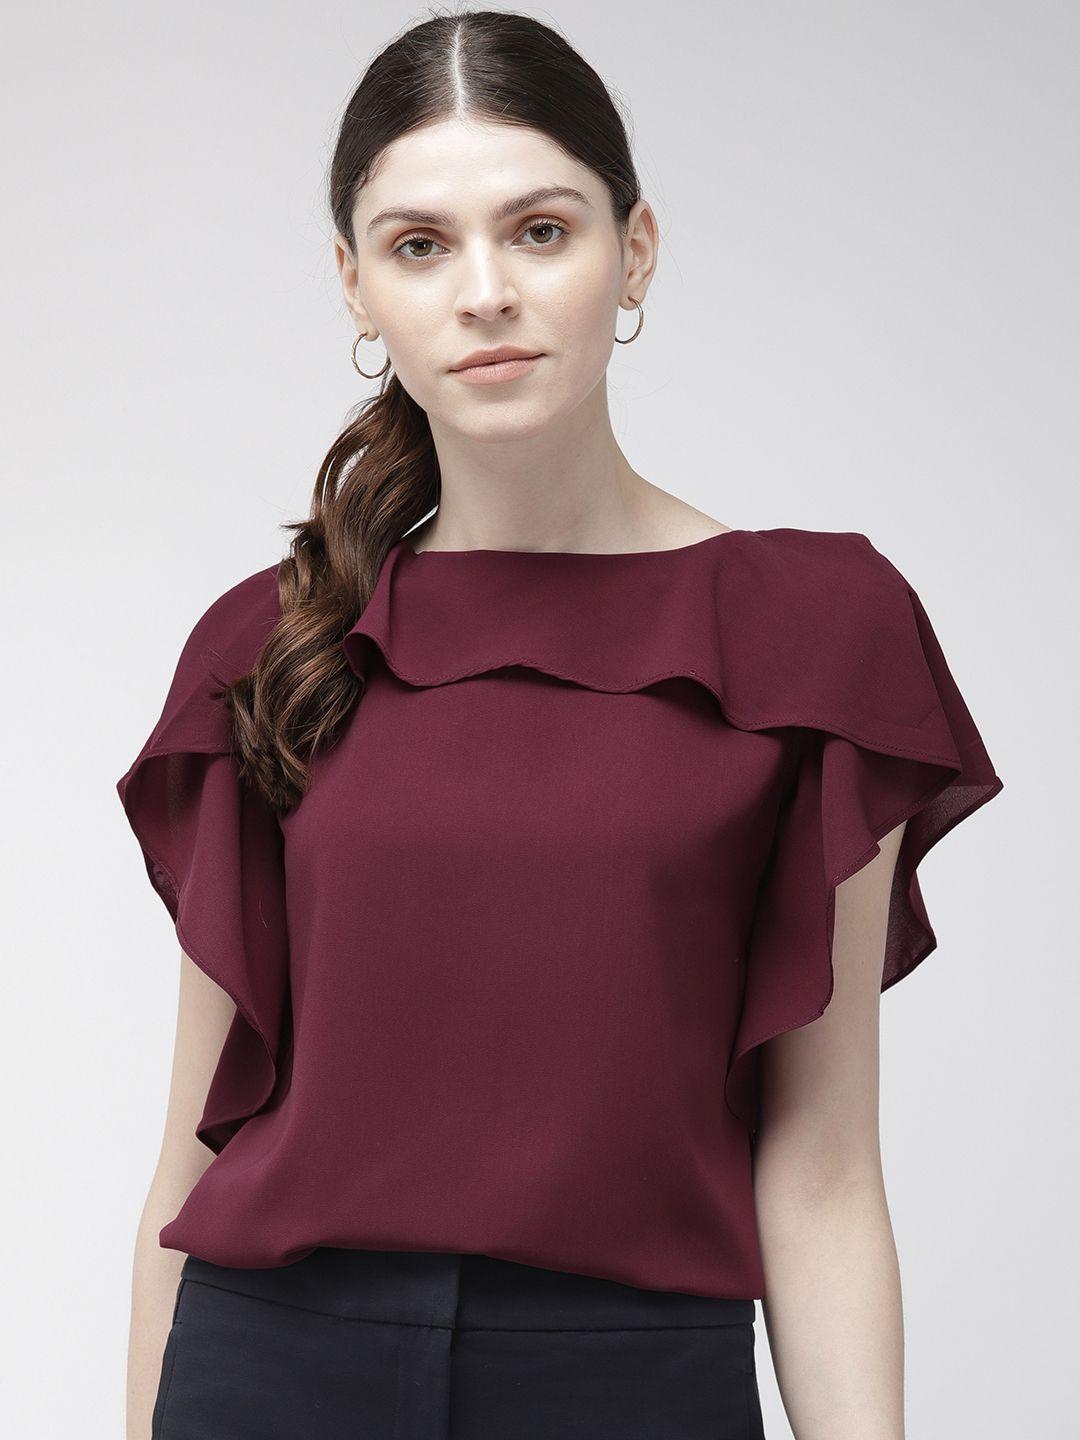 20dresses women burgundy solid top